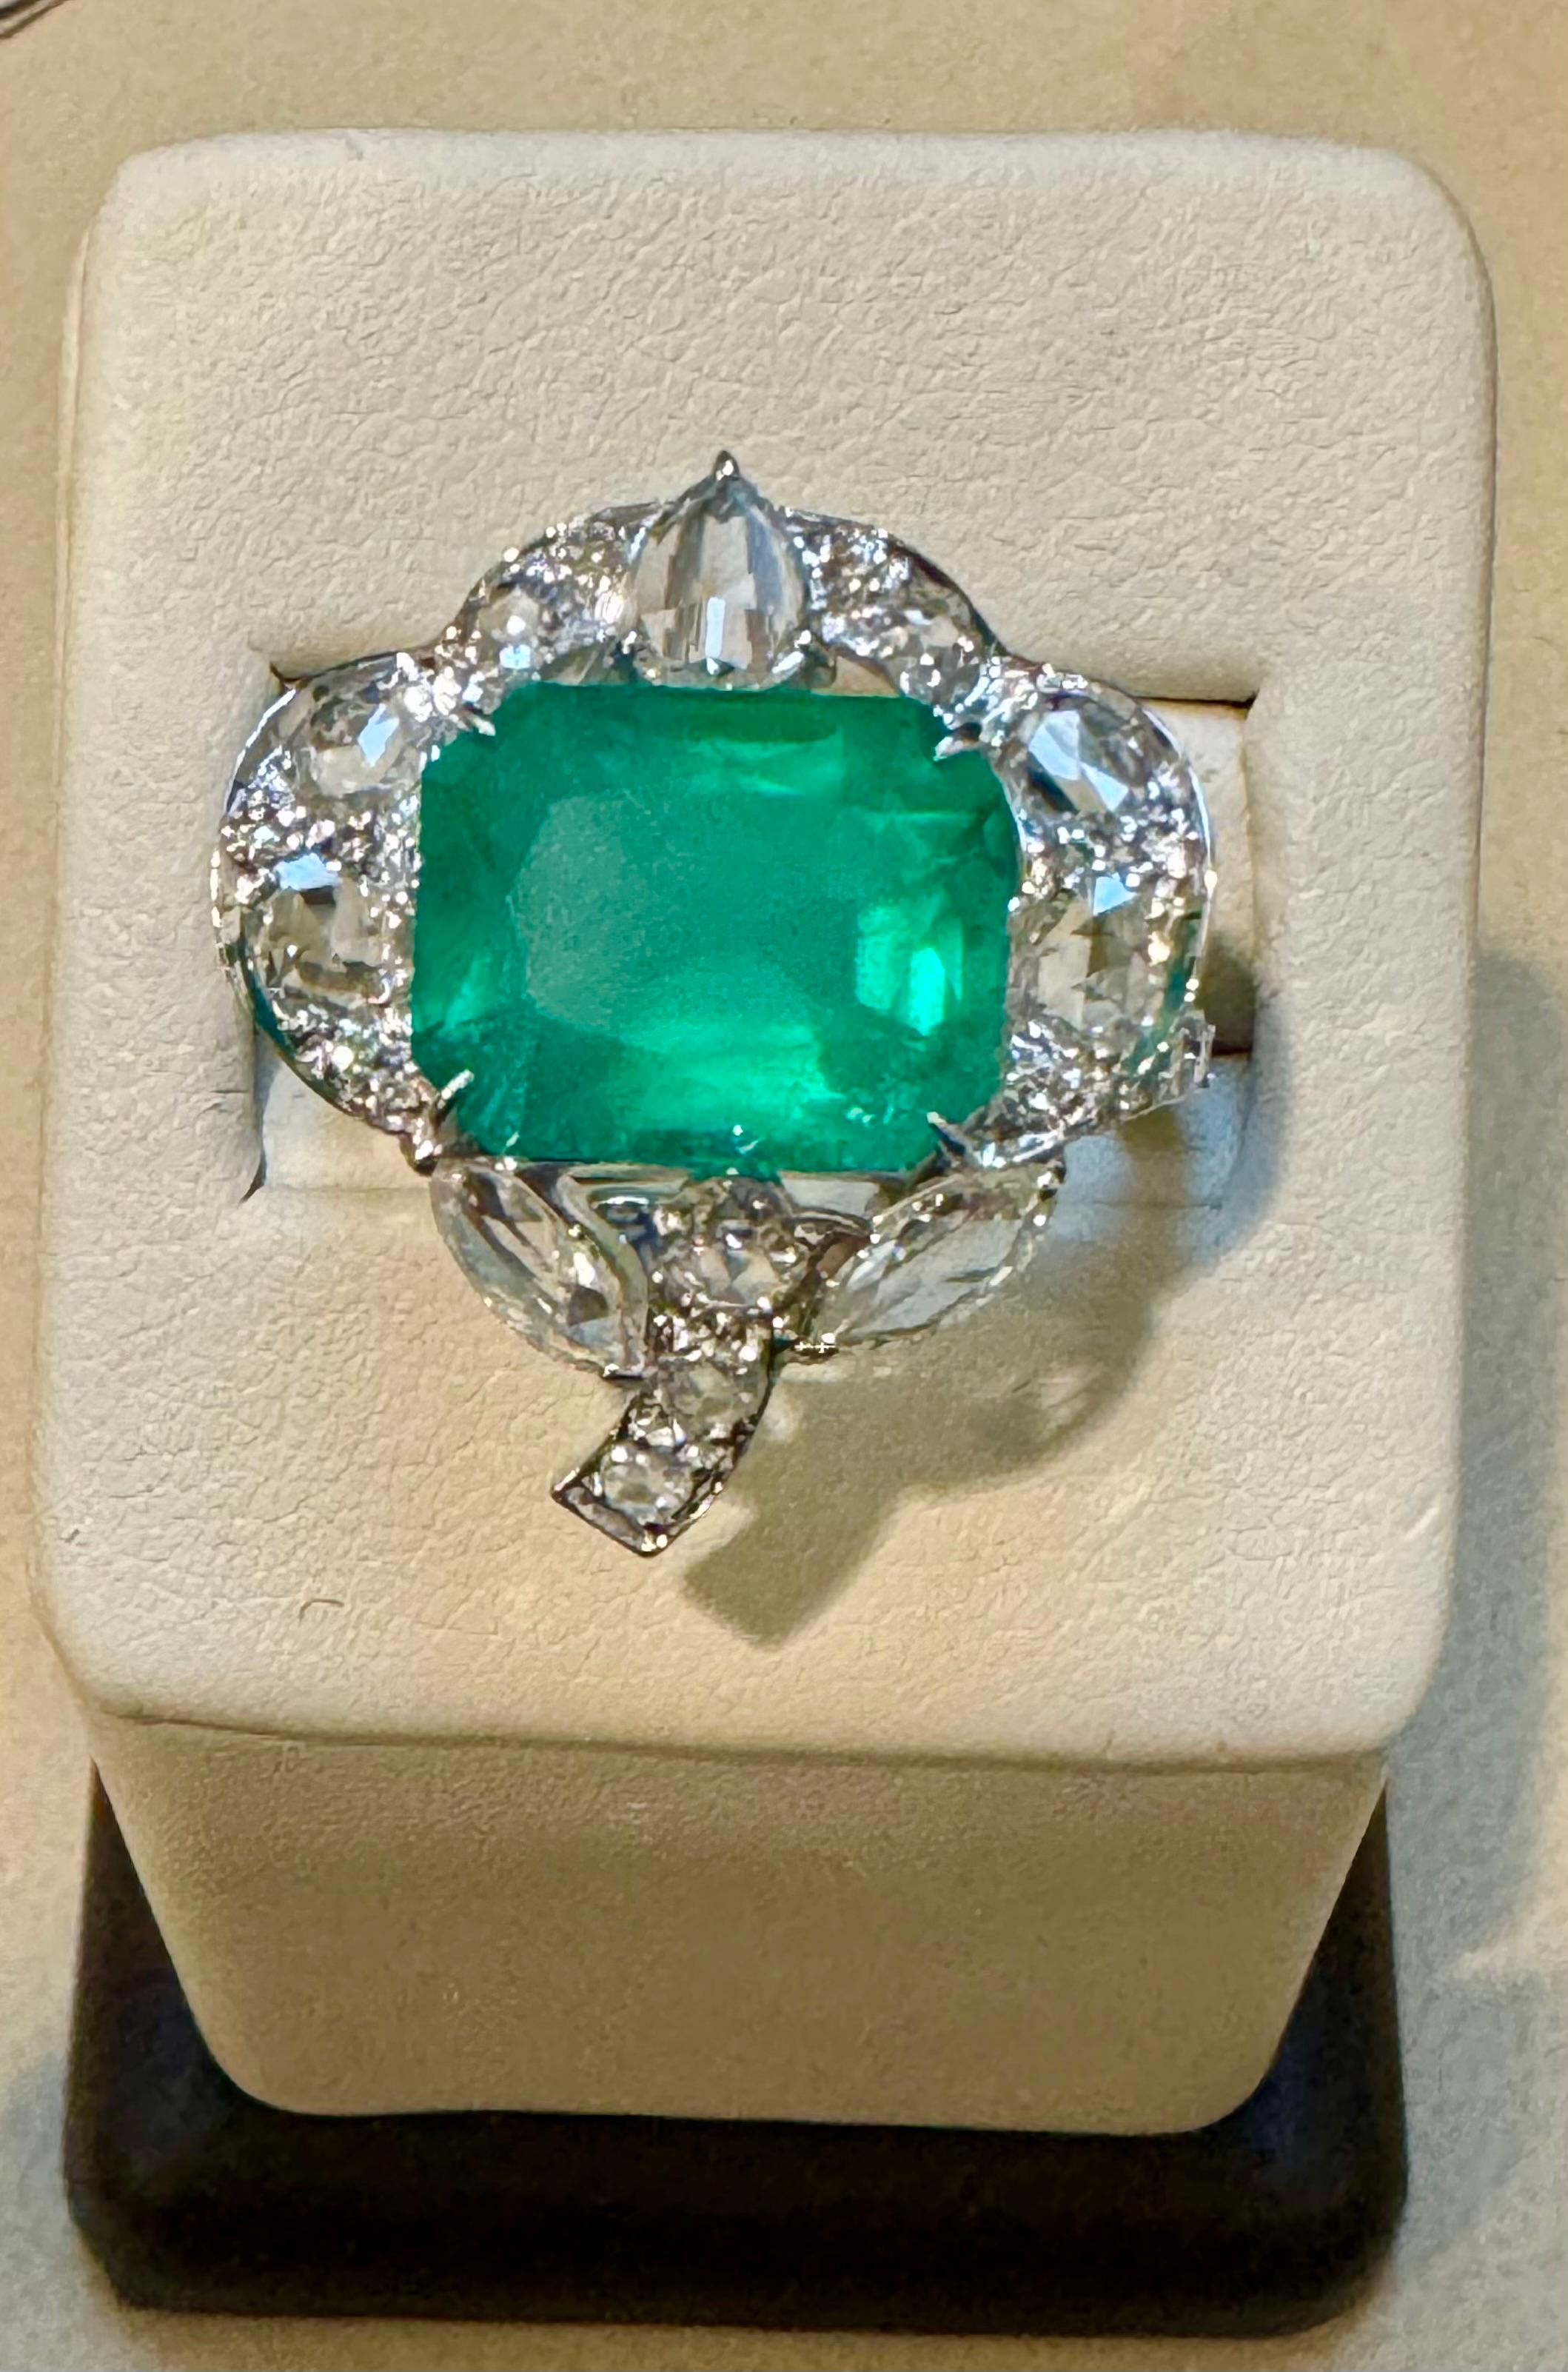 7 Ct Finest Zambian Emerald Cut Emerald & 1.5Ct Diamond Ring, 18 Kt Gold Size 9 For Sale 1